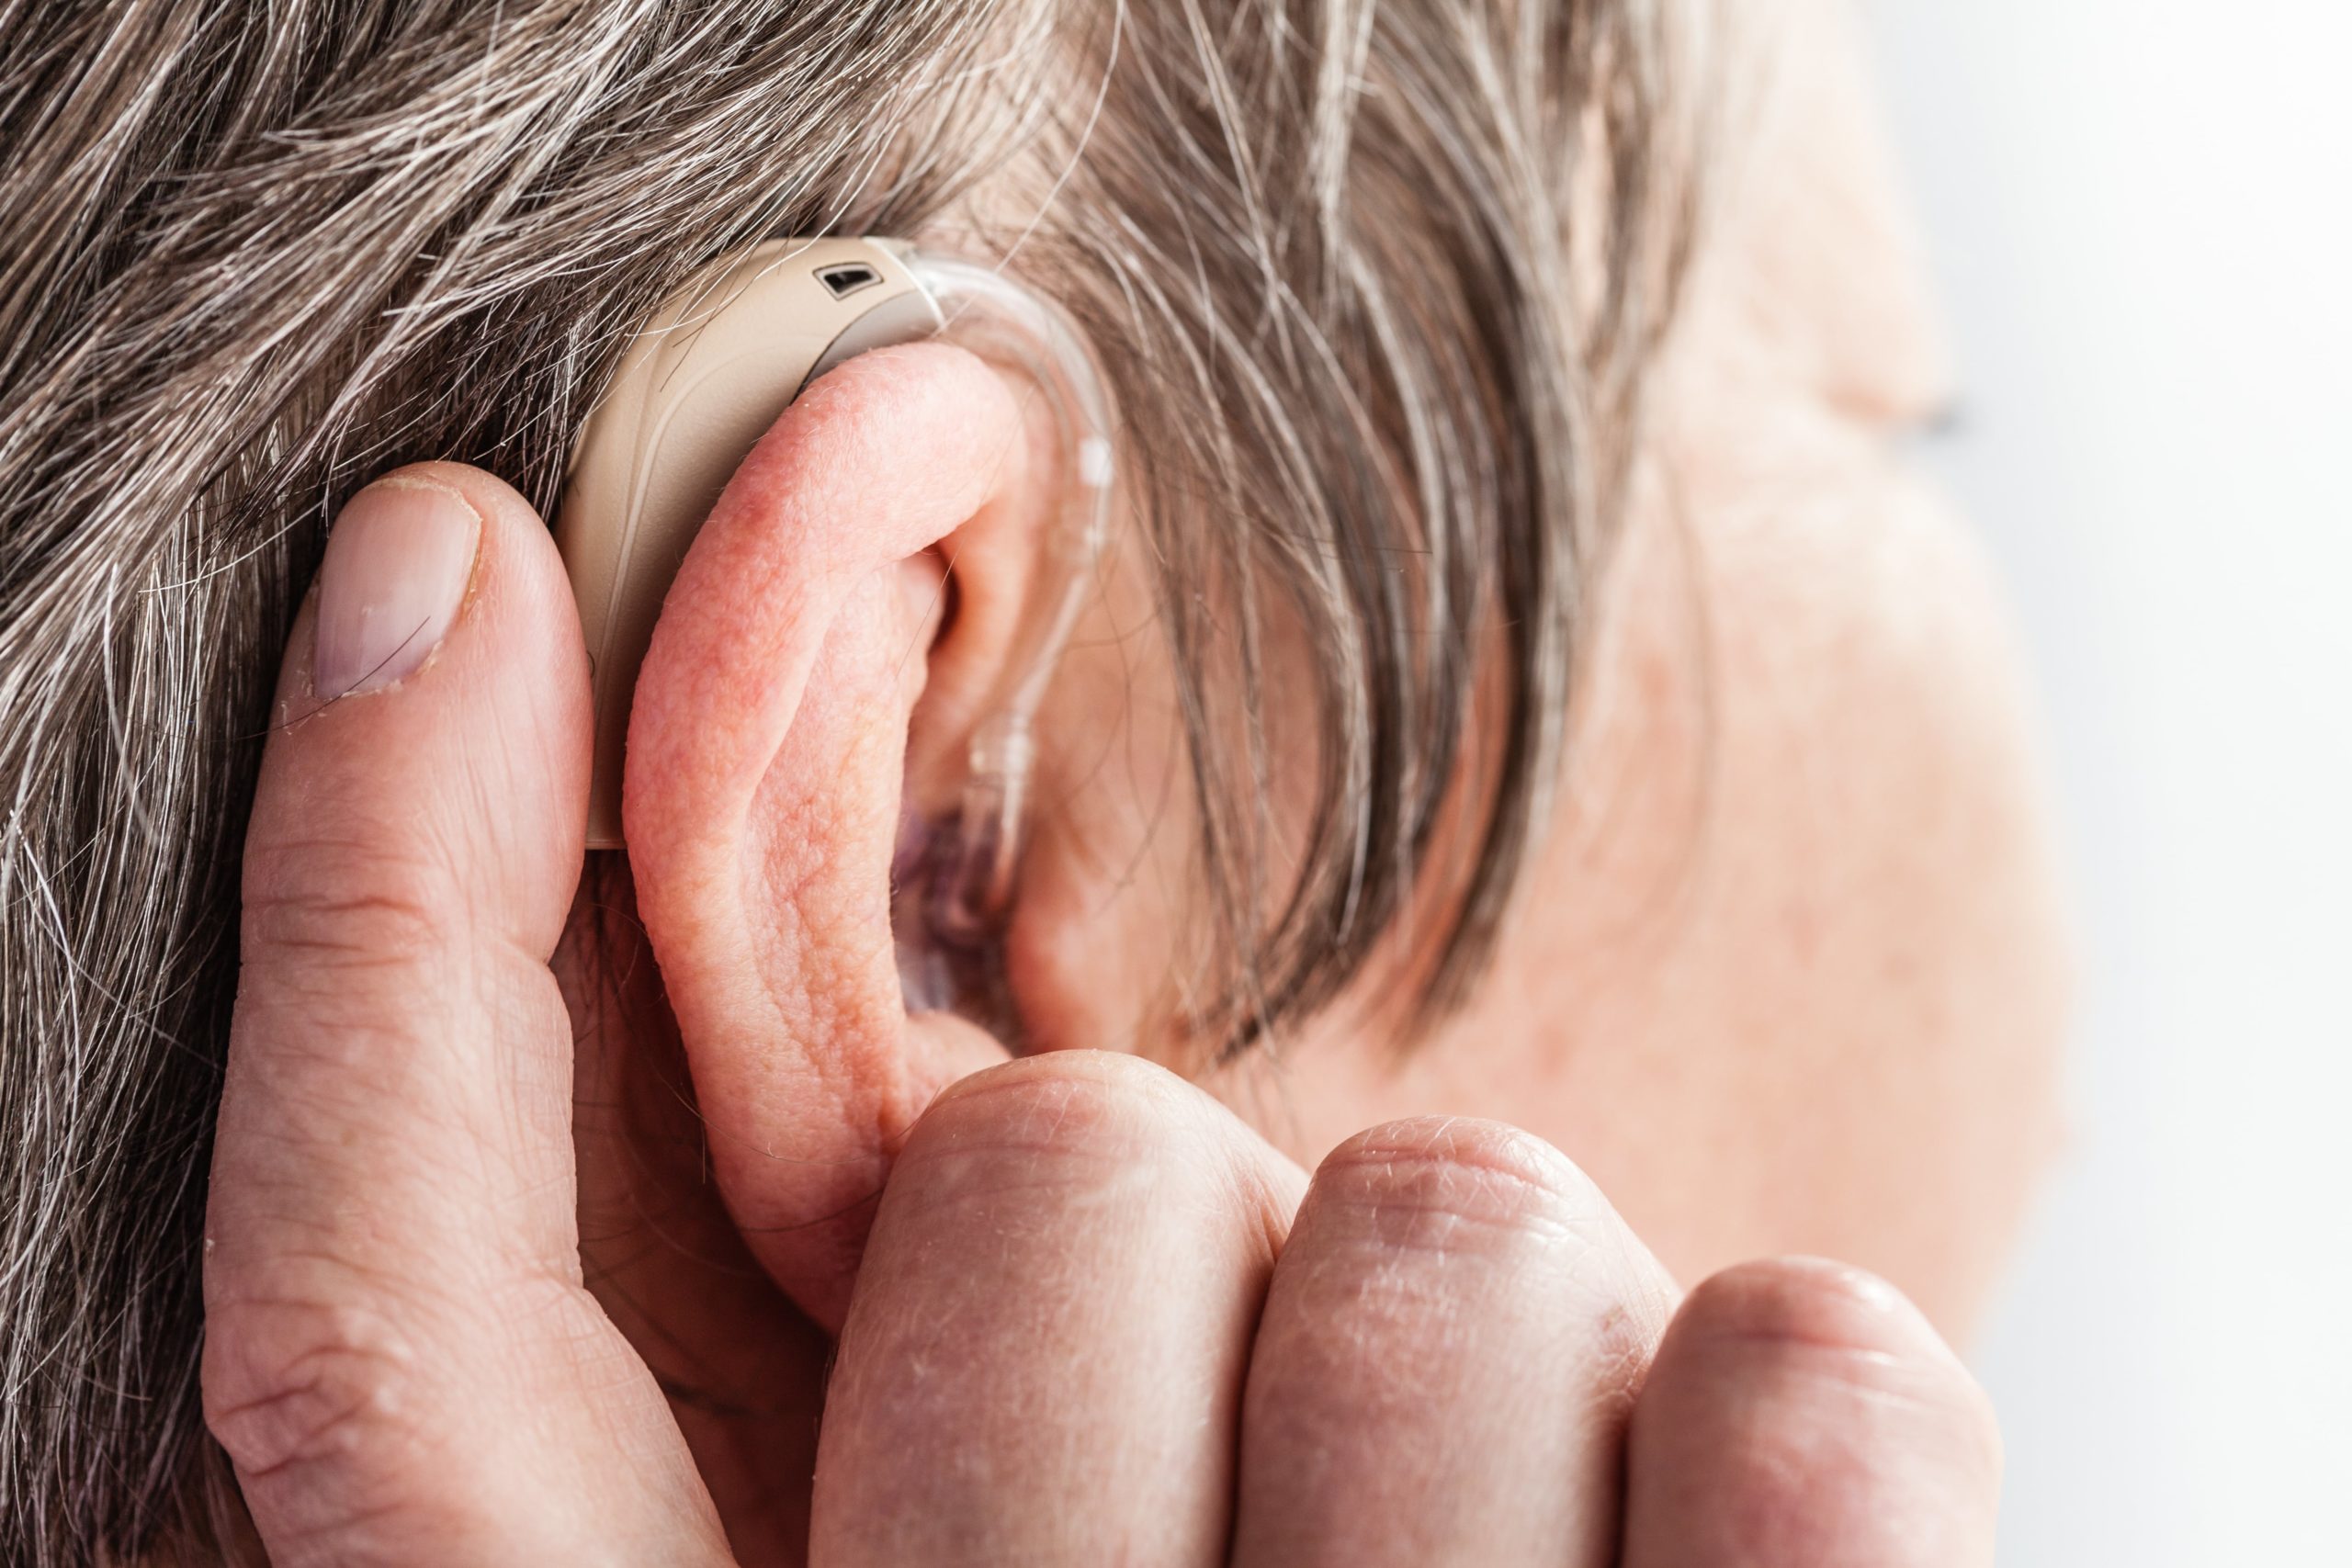 hearing aid user